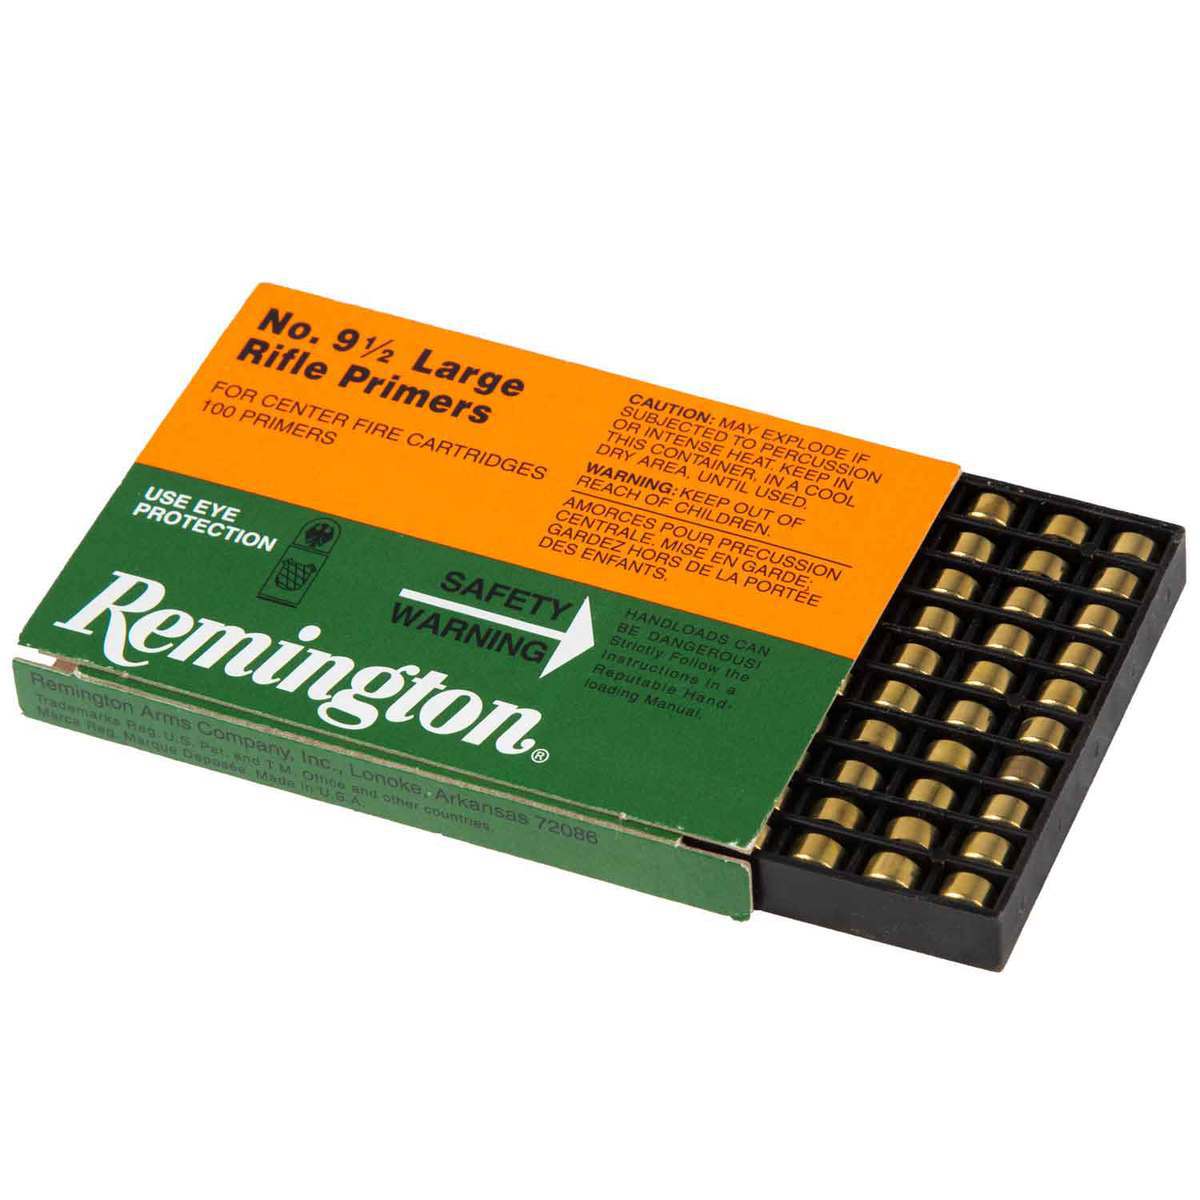 Remington Boxer #9-1/2 Large Rifle Primers - 100 Count - Large Rifle |  Sportsman's Warehouse